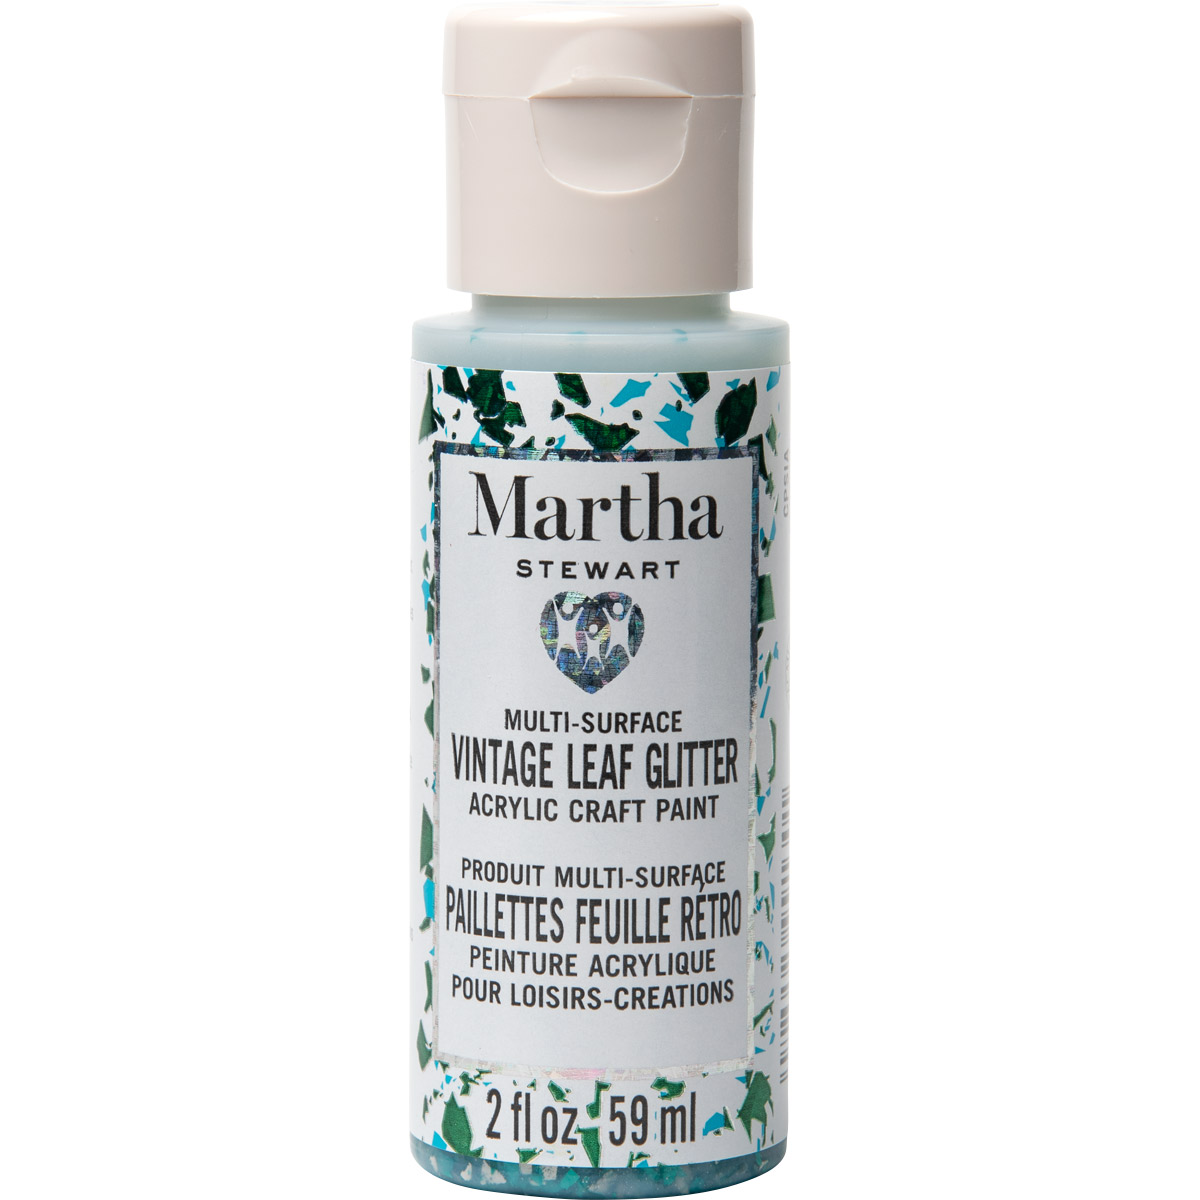 Martha Stewart ® Multi-Surface Vintage Leaf Glitter Acrylic Craft Paint CPSIA - Wintermint, 2 oz. - 